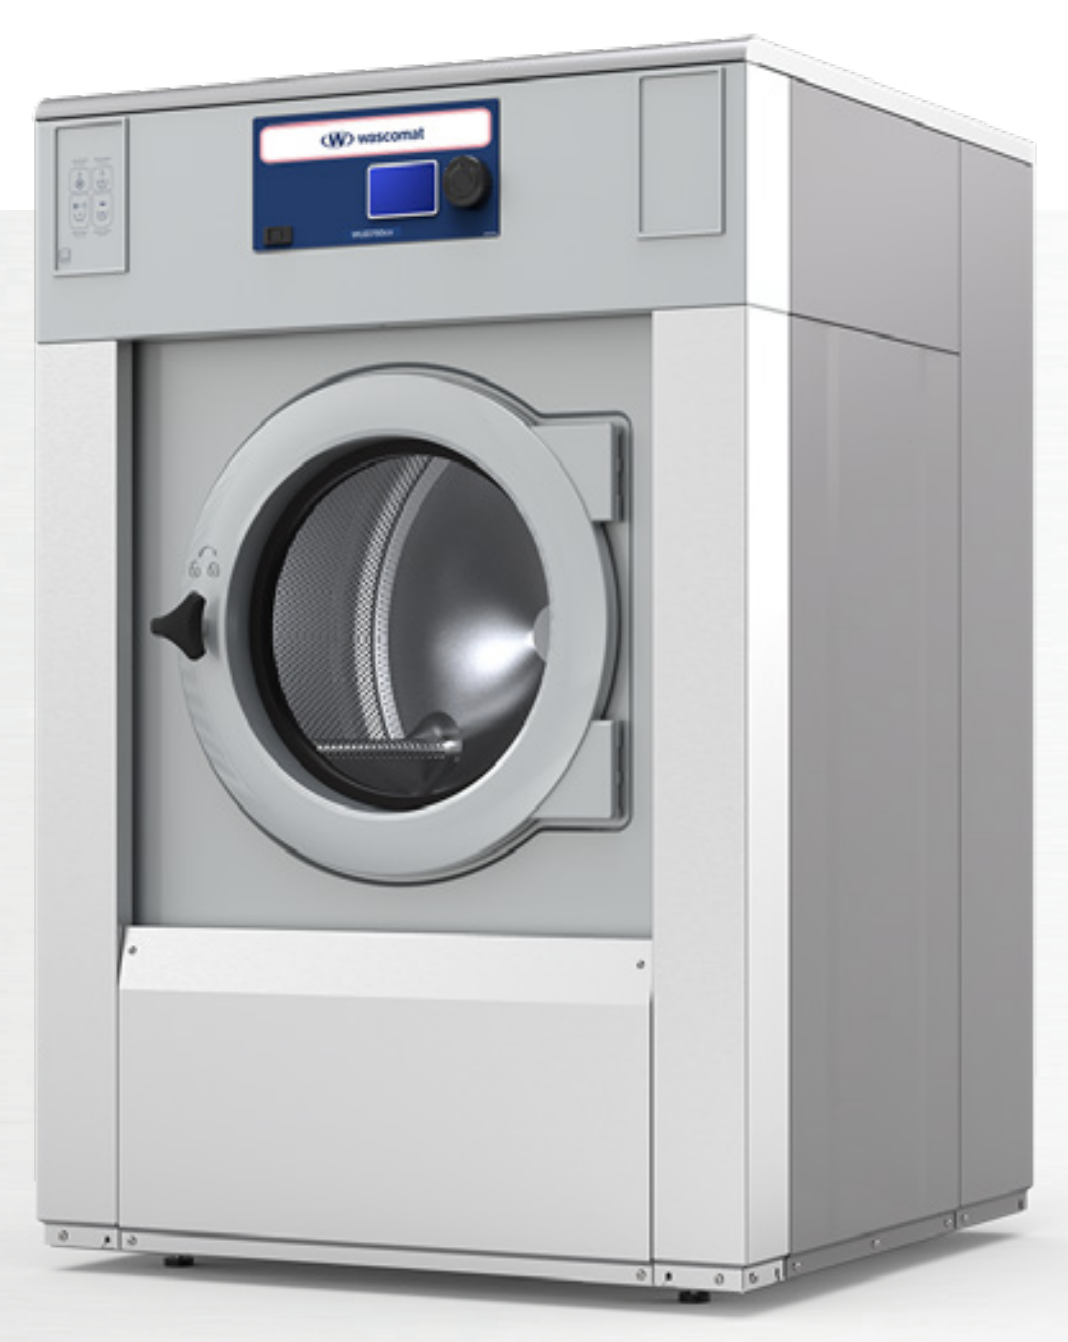 New 2022 Wascomat Wud718 Opl - Automatic Laundry Service Of Va, Inc.